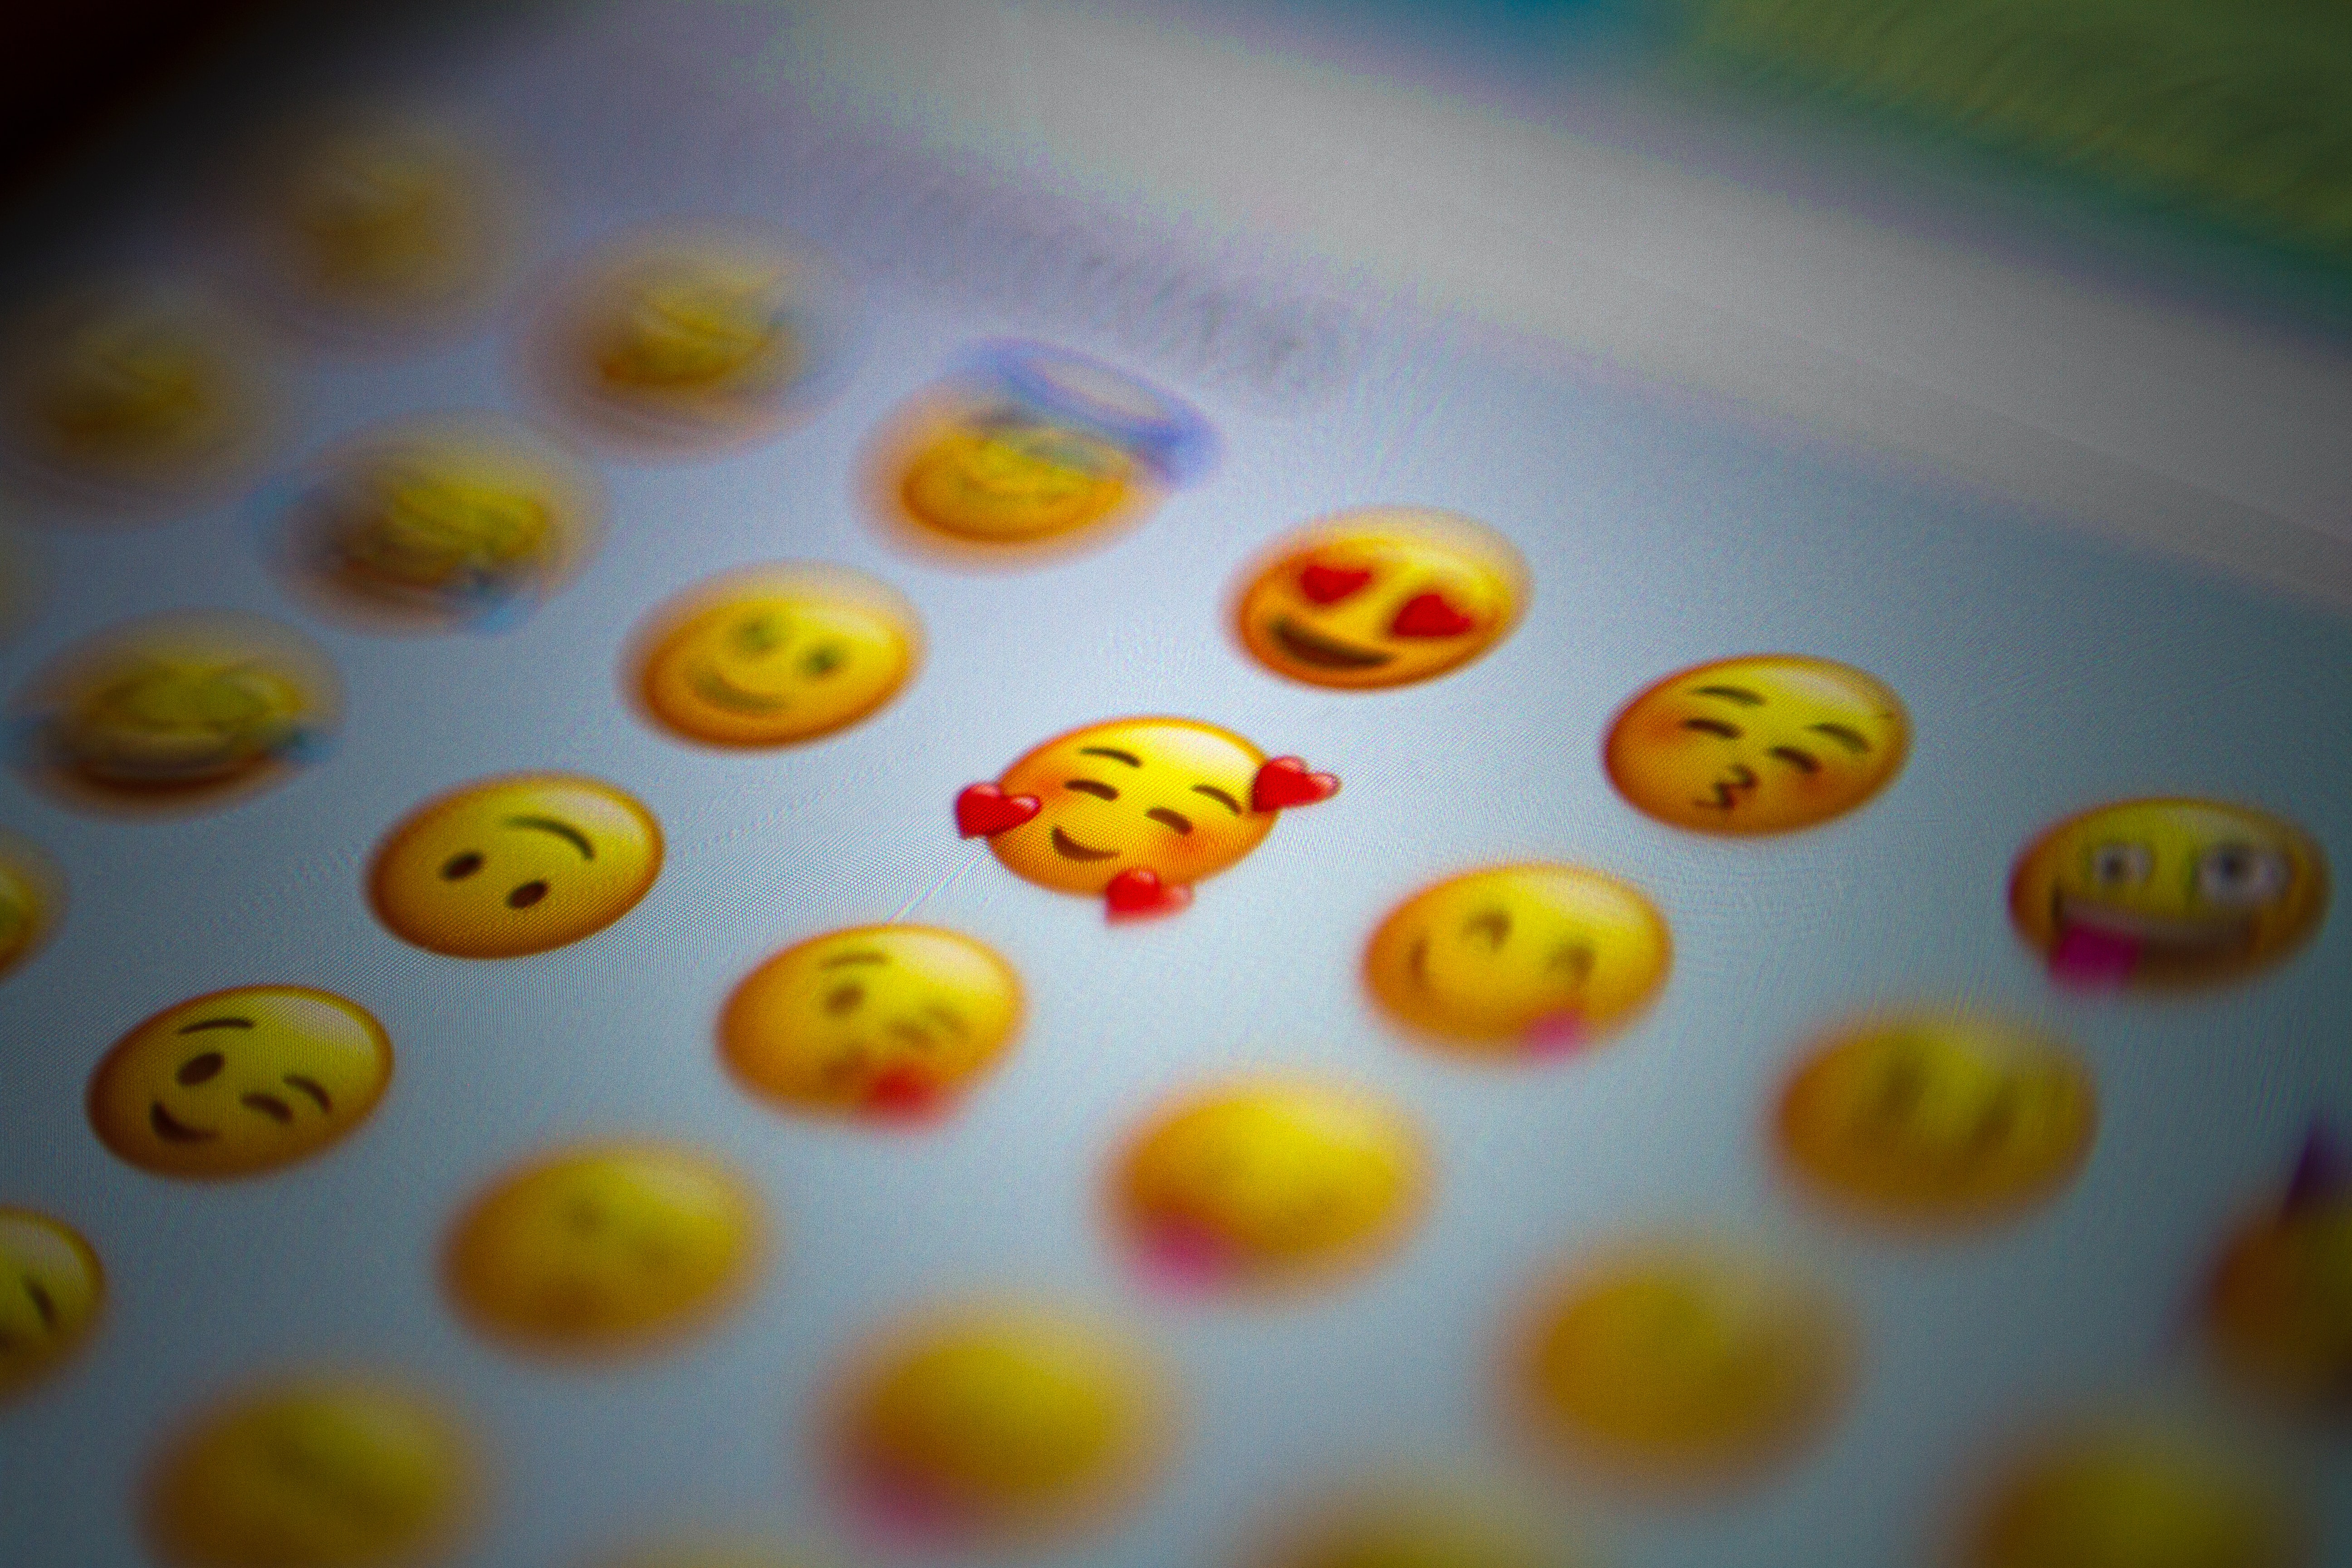 A phone screen highlighting the heart-face emoji